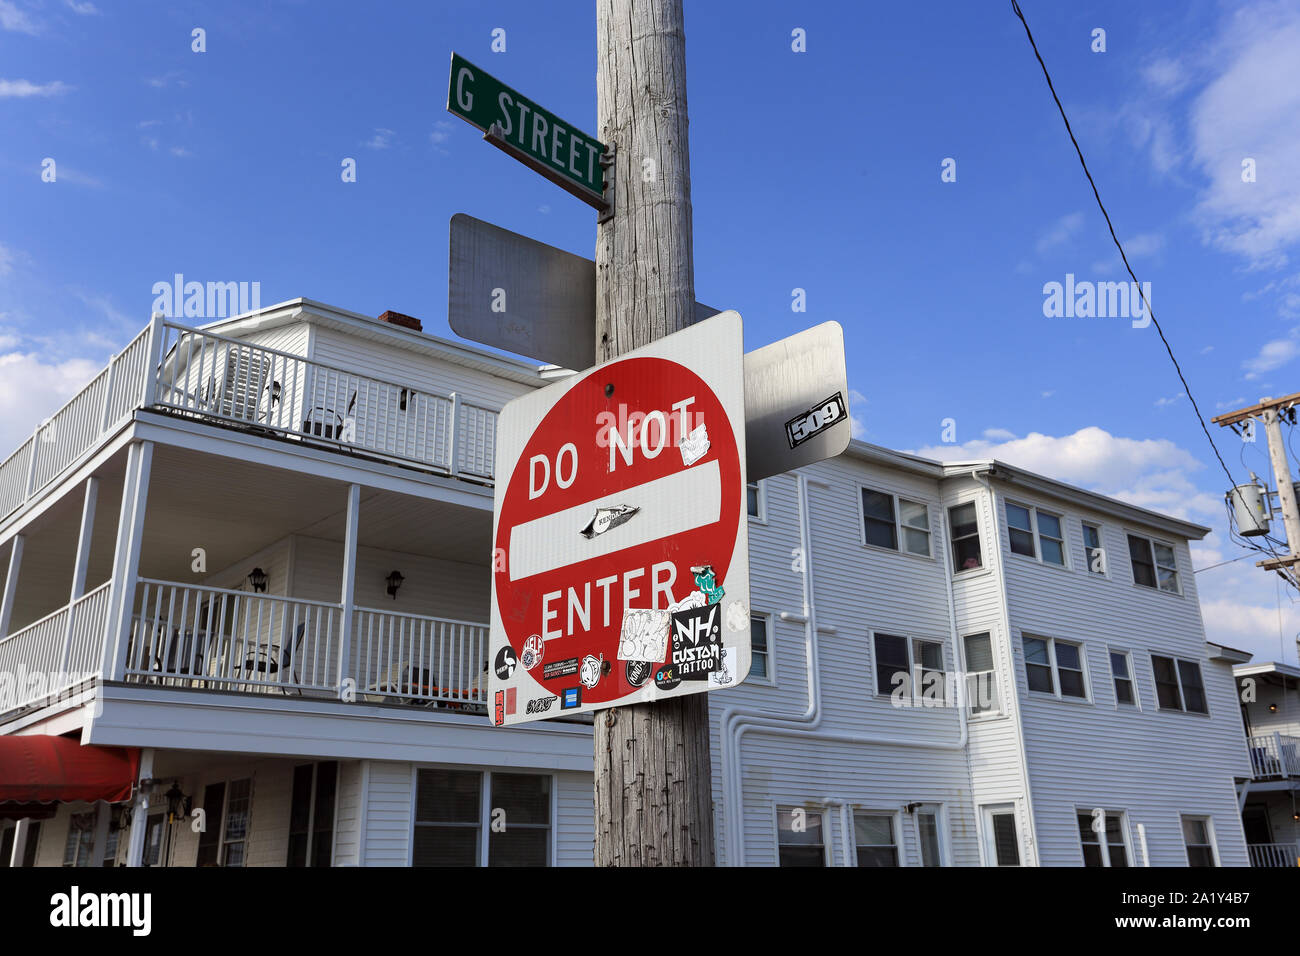 Do not enter sign Hampton Beach New Hampshire Stock Photo